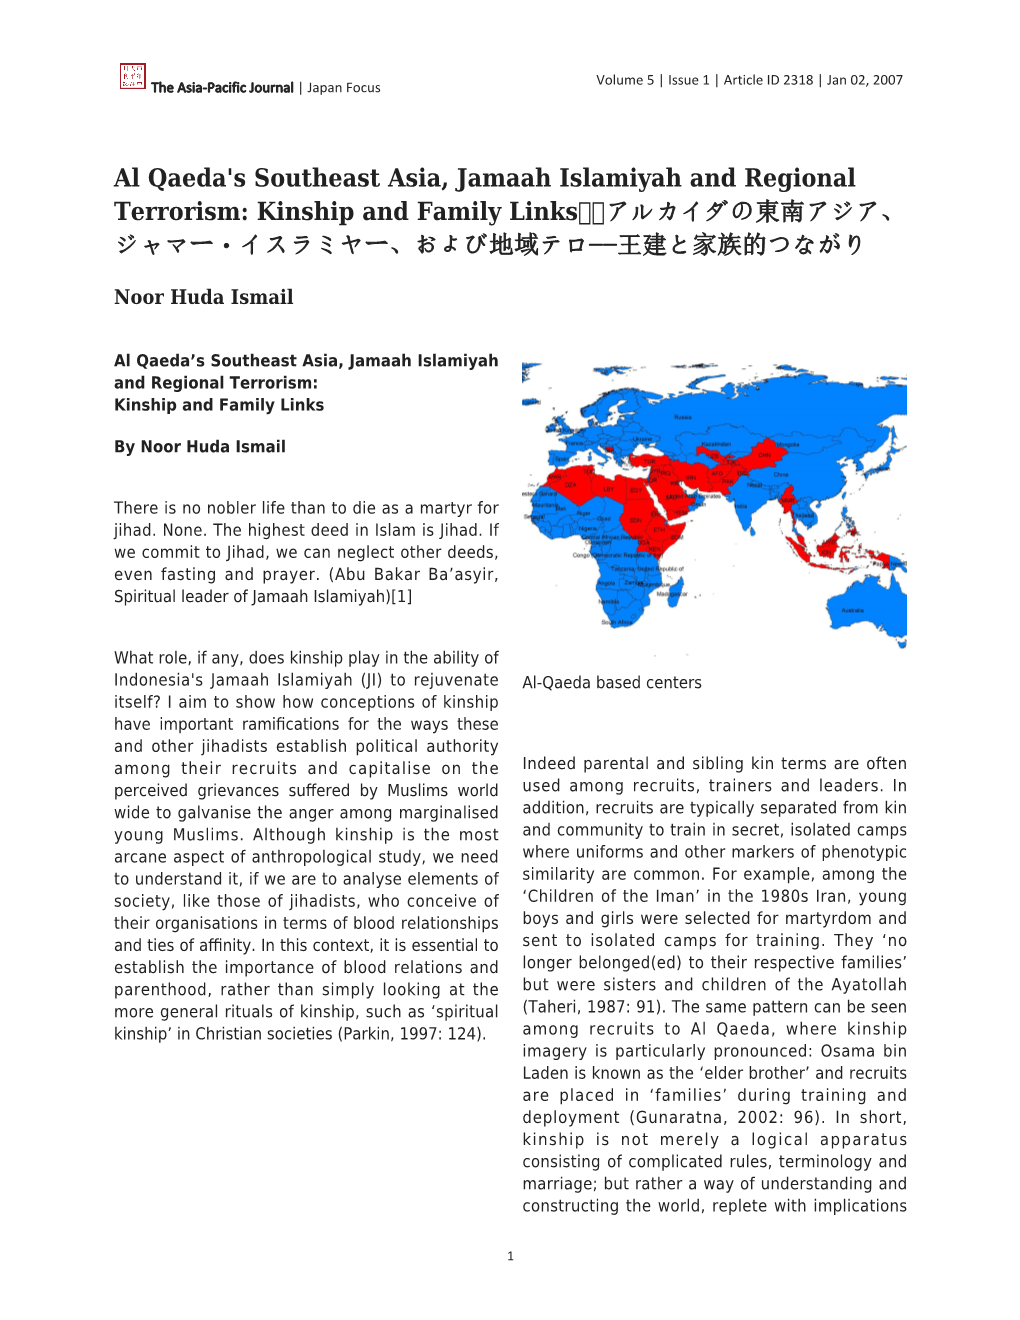 Al Qaeda's Southeast Asia, Jamaah Islamiyah and Regional Terrorism: Kinship and Family Links アルカイダの東南アジア、 ジャマー・イスラミヤー、および地域テロ−−王建と家族的つながり